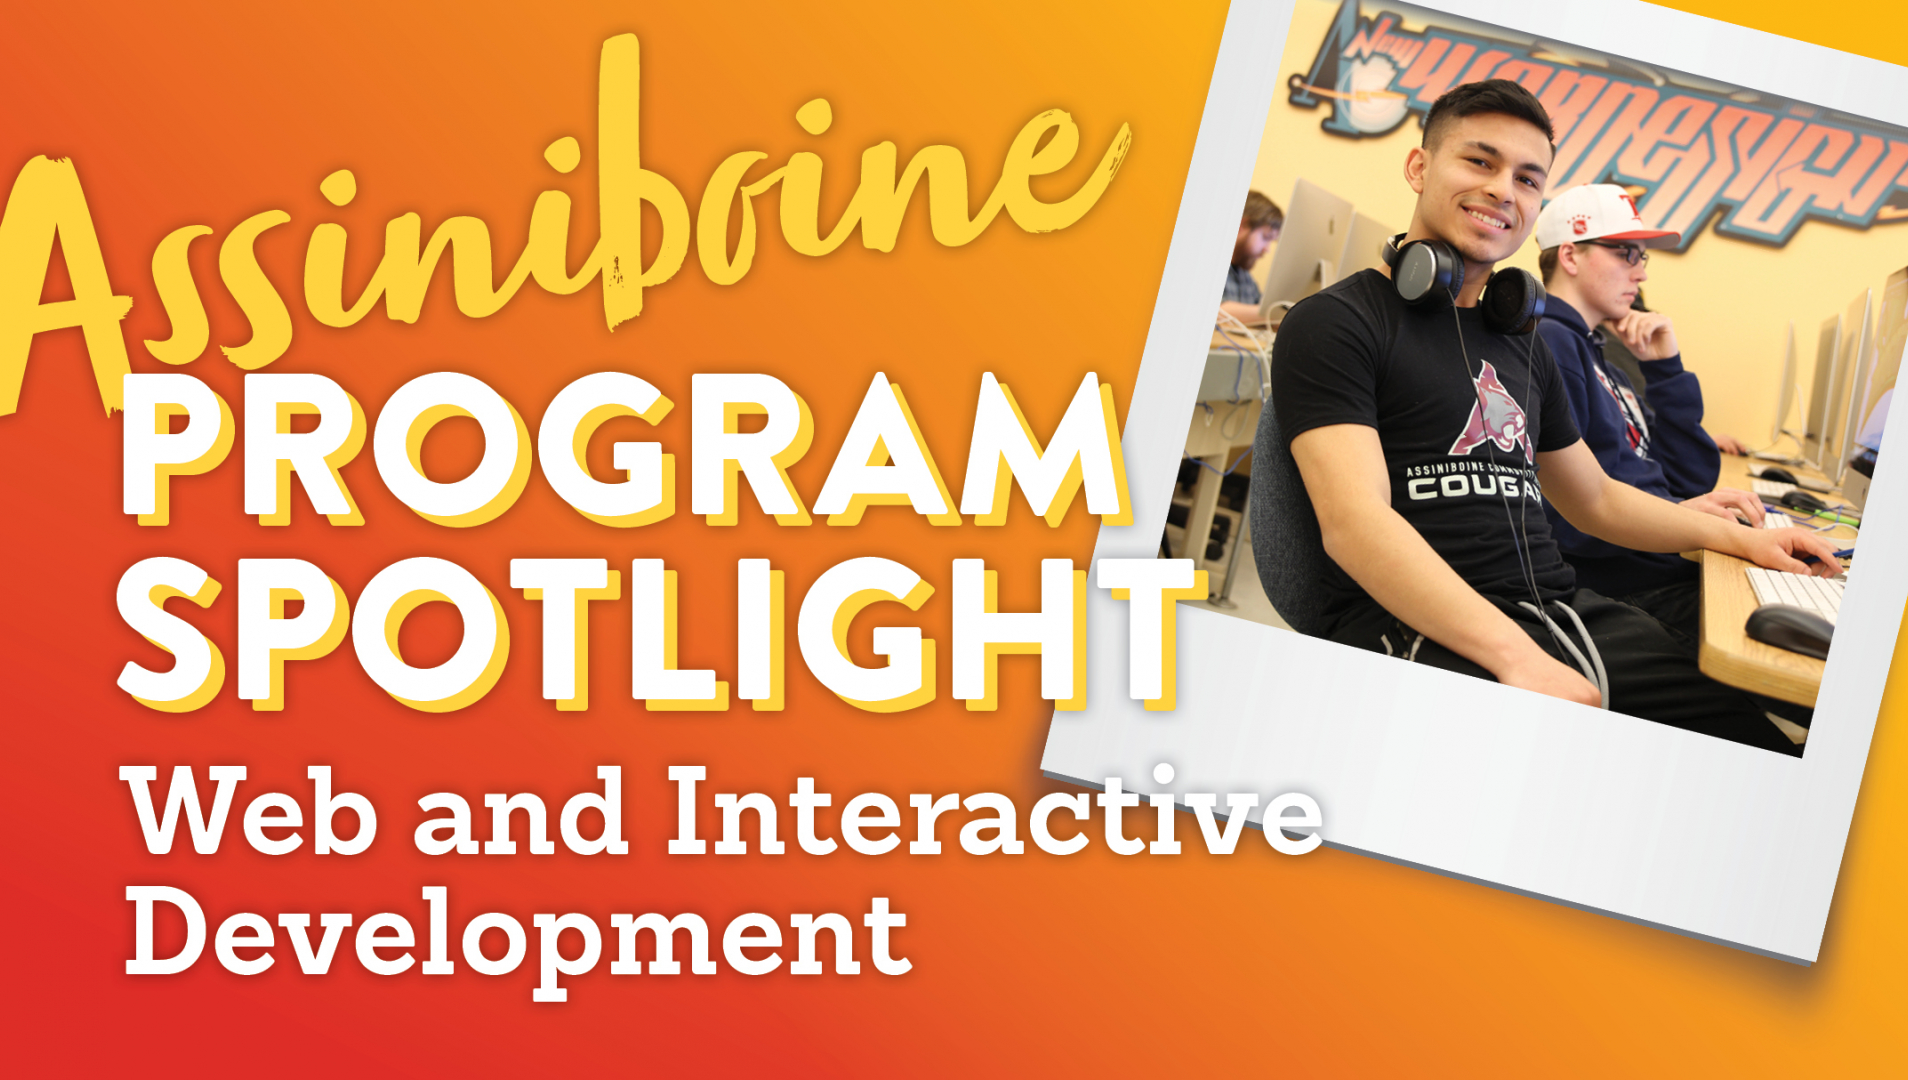 Program Spotlight: Web and Interactive Development